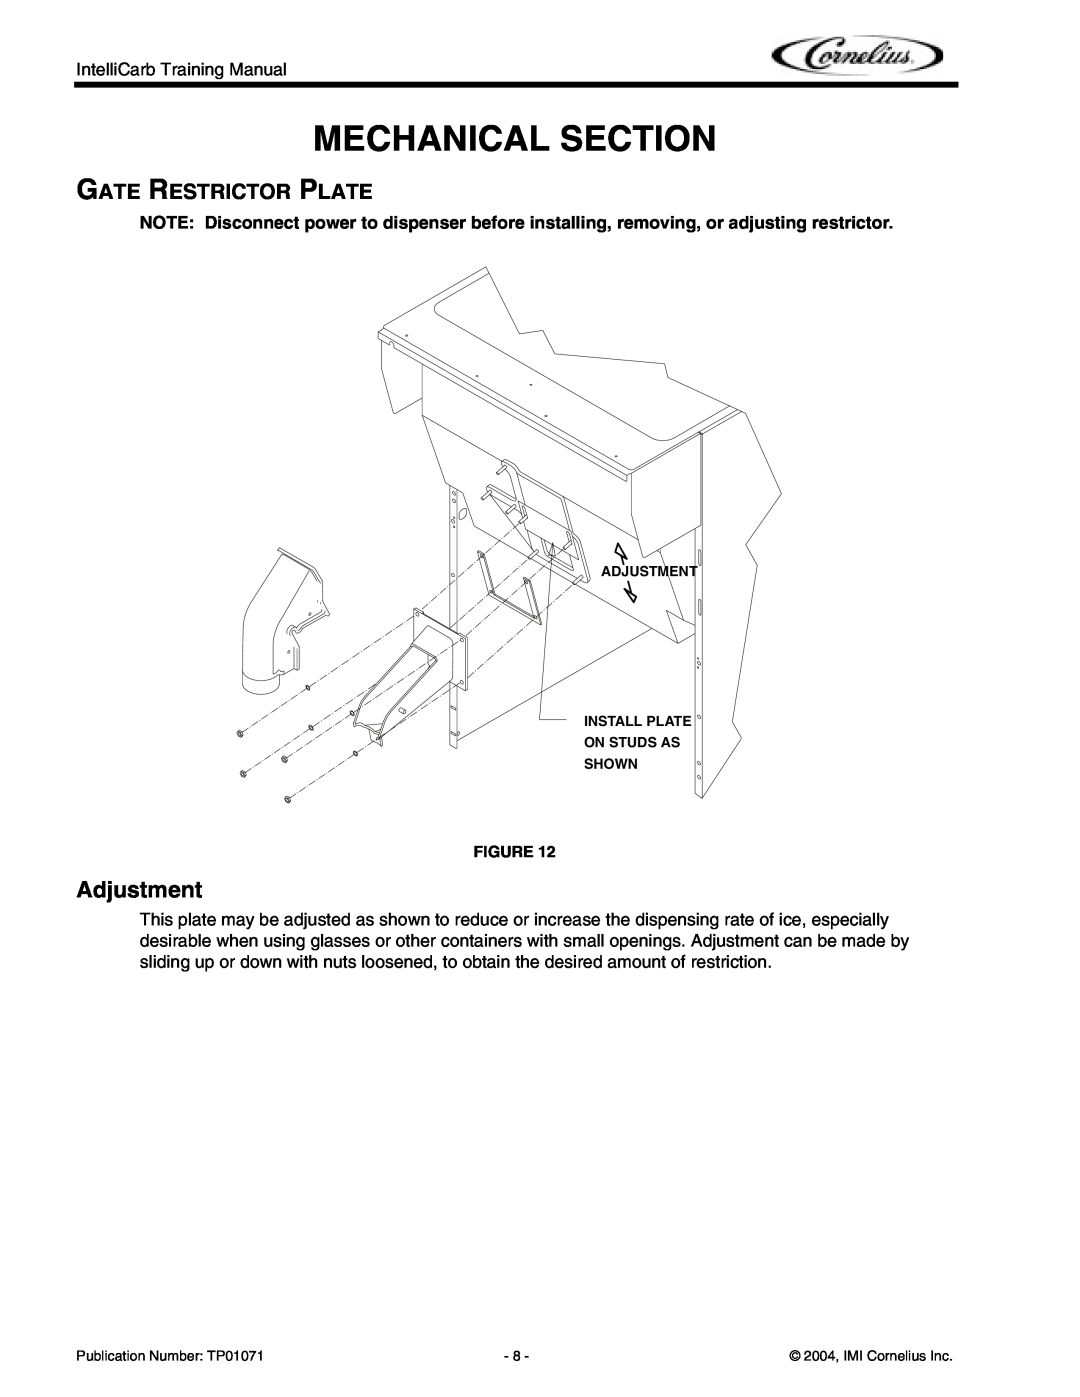 Cornelius Cold Beverage Dispenser manual Mechanical Section, Adjustment, Gate Restrictor Plate 